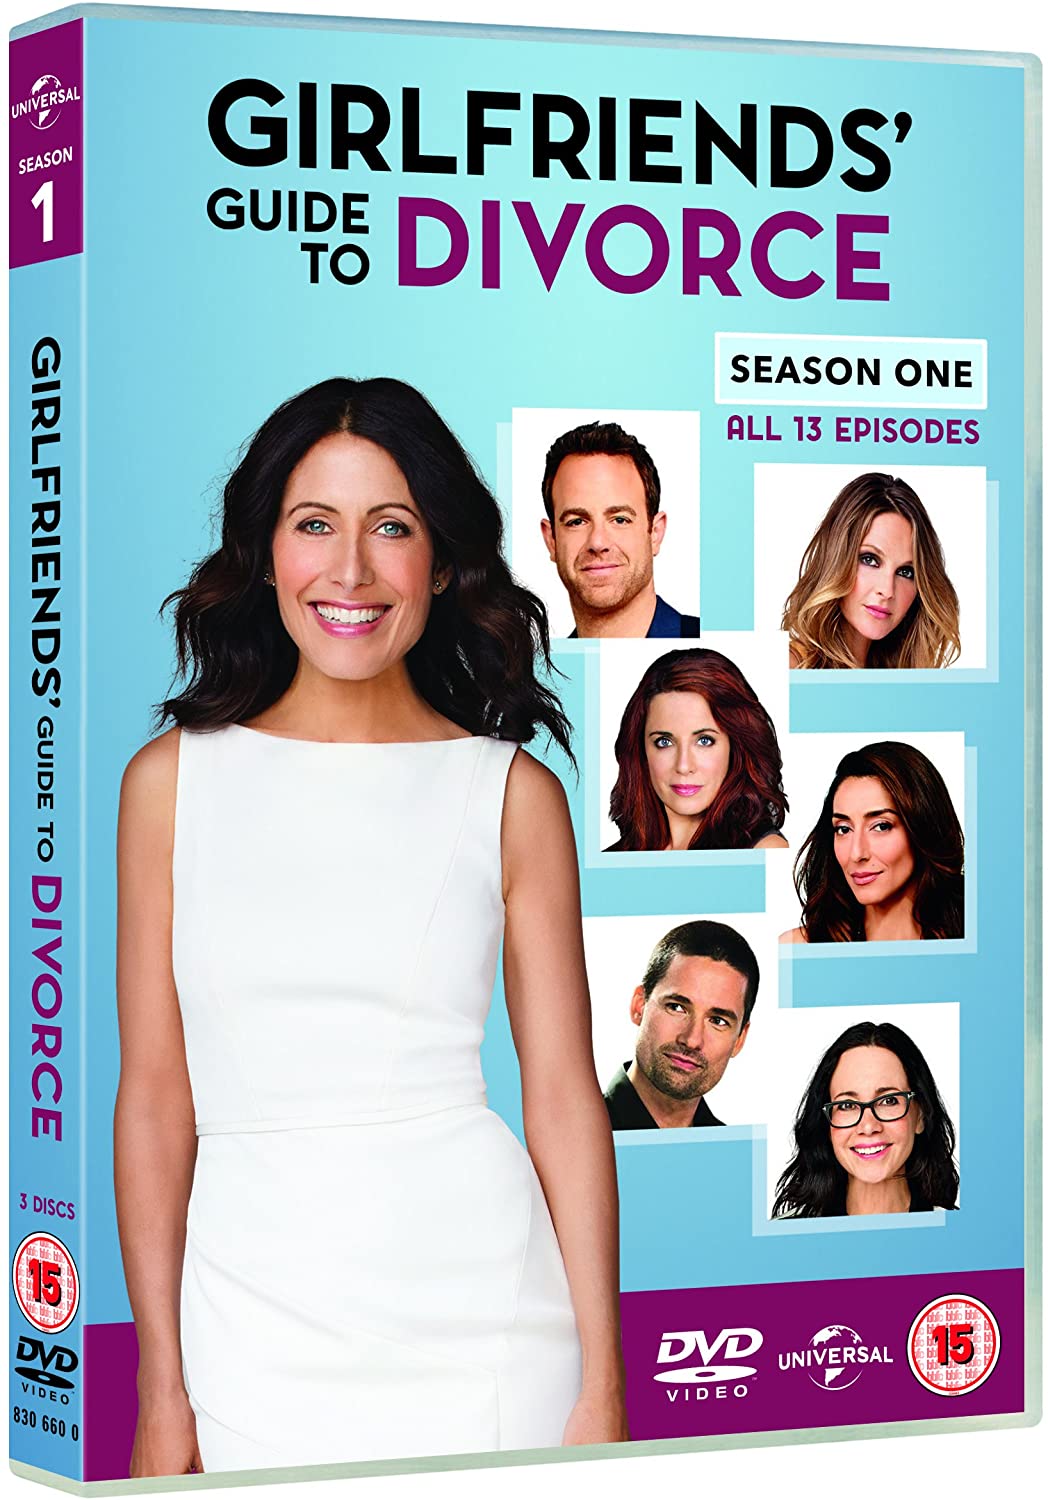 Girlfriends' Guide to Divorce: Season 1 (DVD)